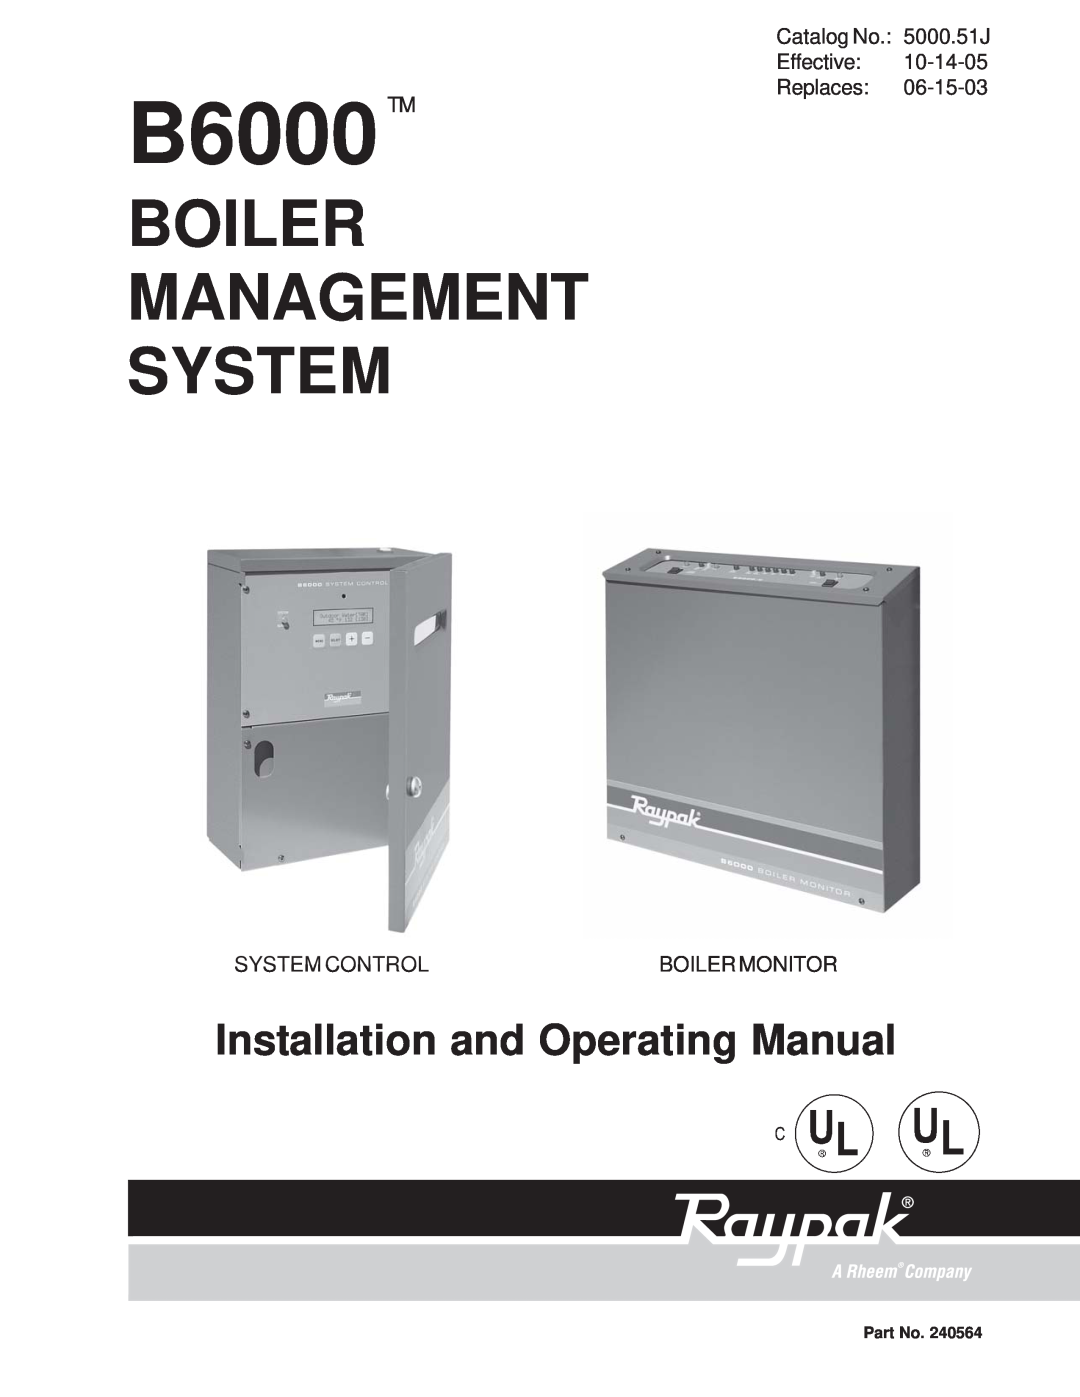 Raypak manual Installation and Operating Manual, B6000TM, Boiler Management System 